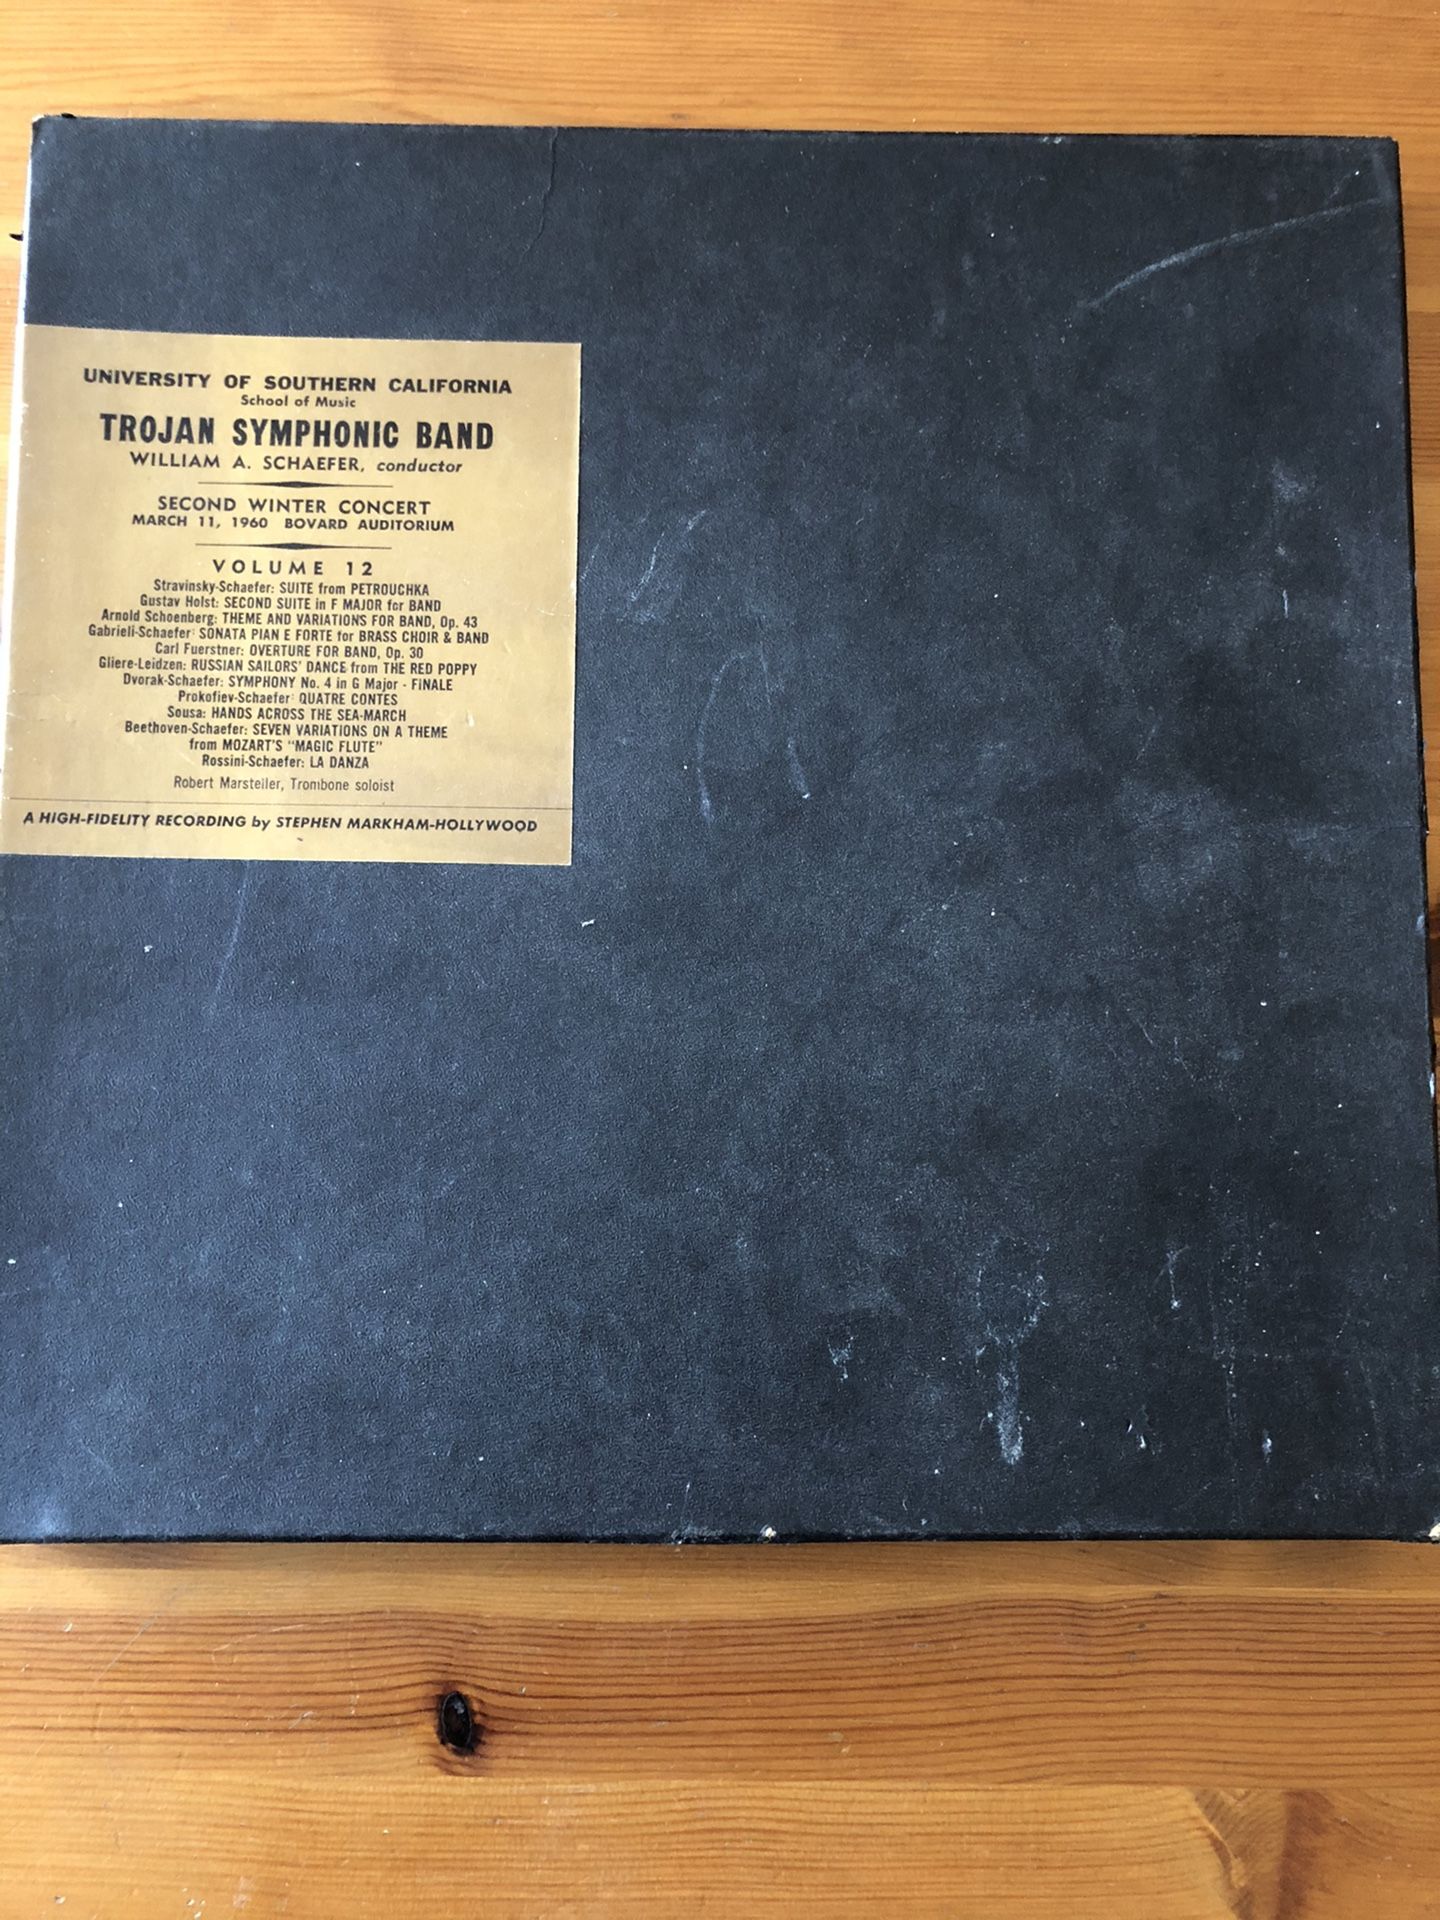 UNIVERSITY OF SOUTHERN CALIFORNIA TROJAN SYMPHONIC BAND OF 1960 VINYL LP ALBUM